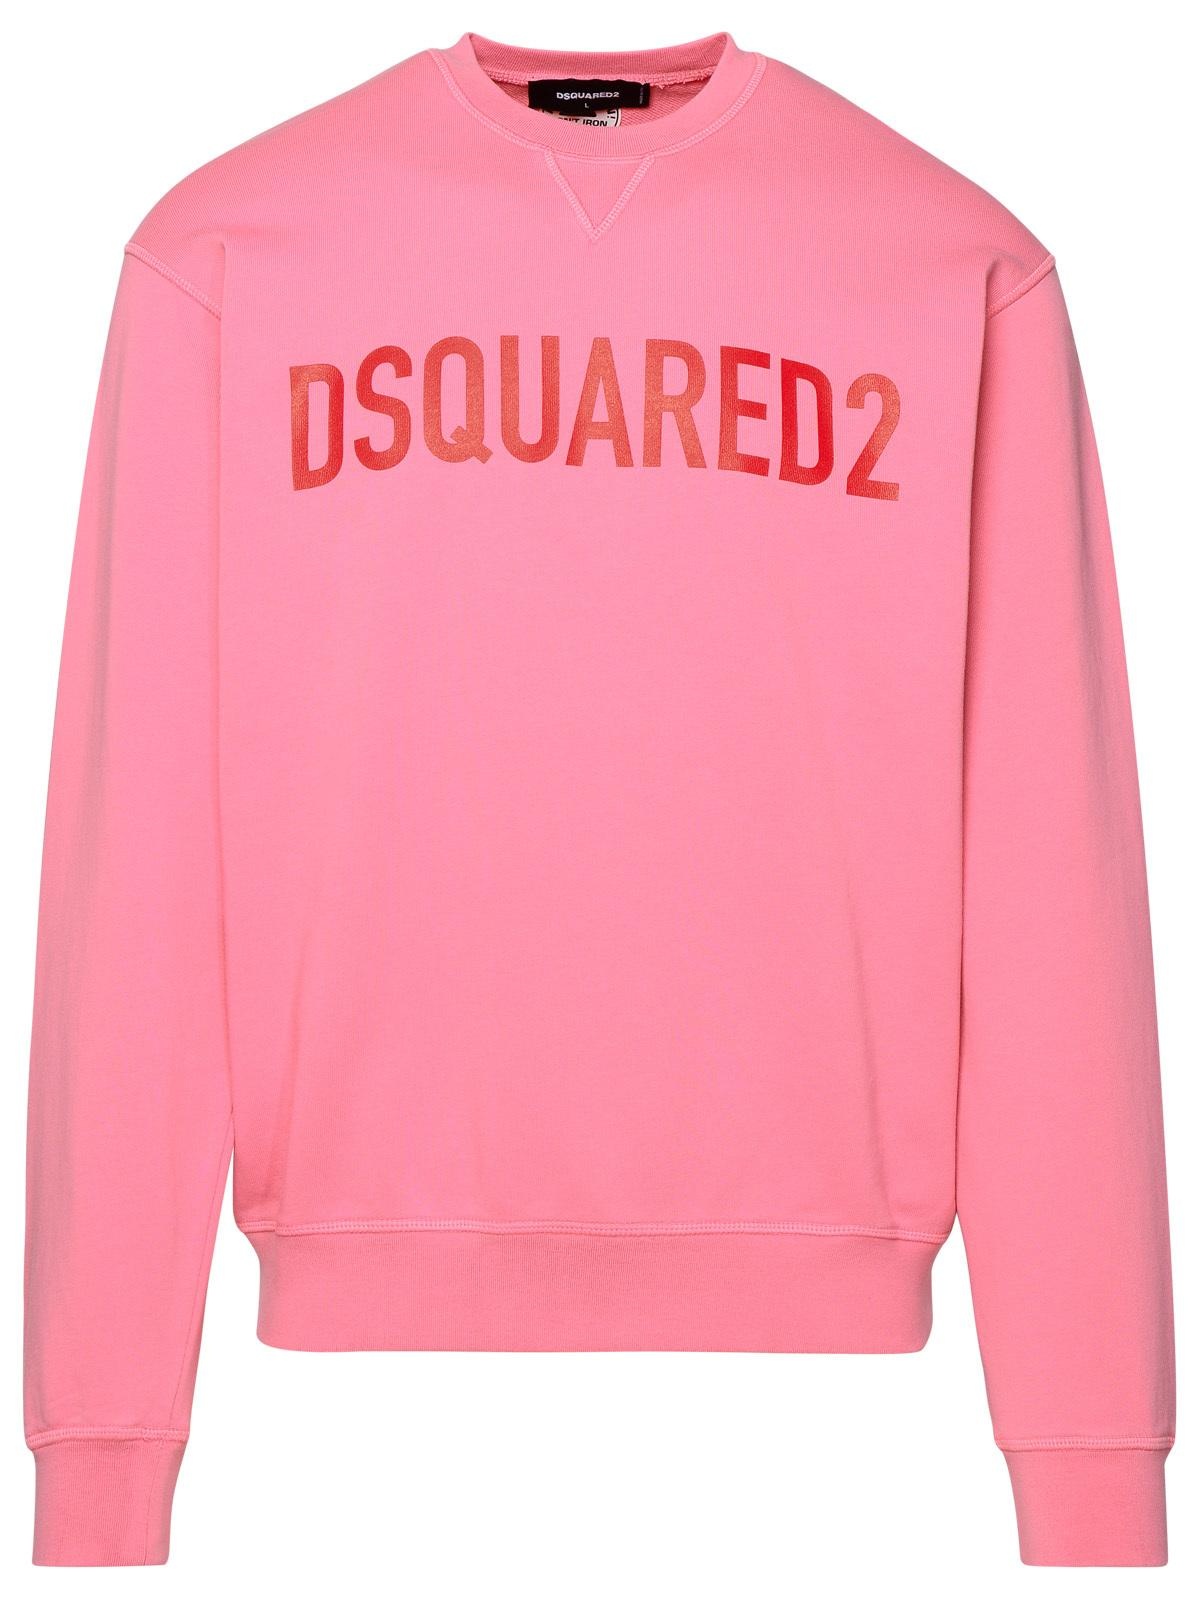 Dsquared2 Pink Cotton Sweatshirt - 1